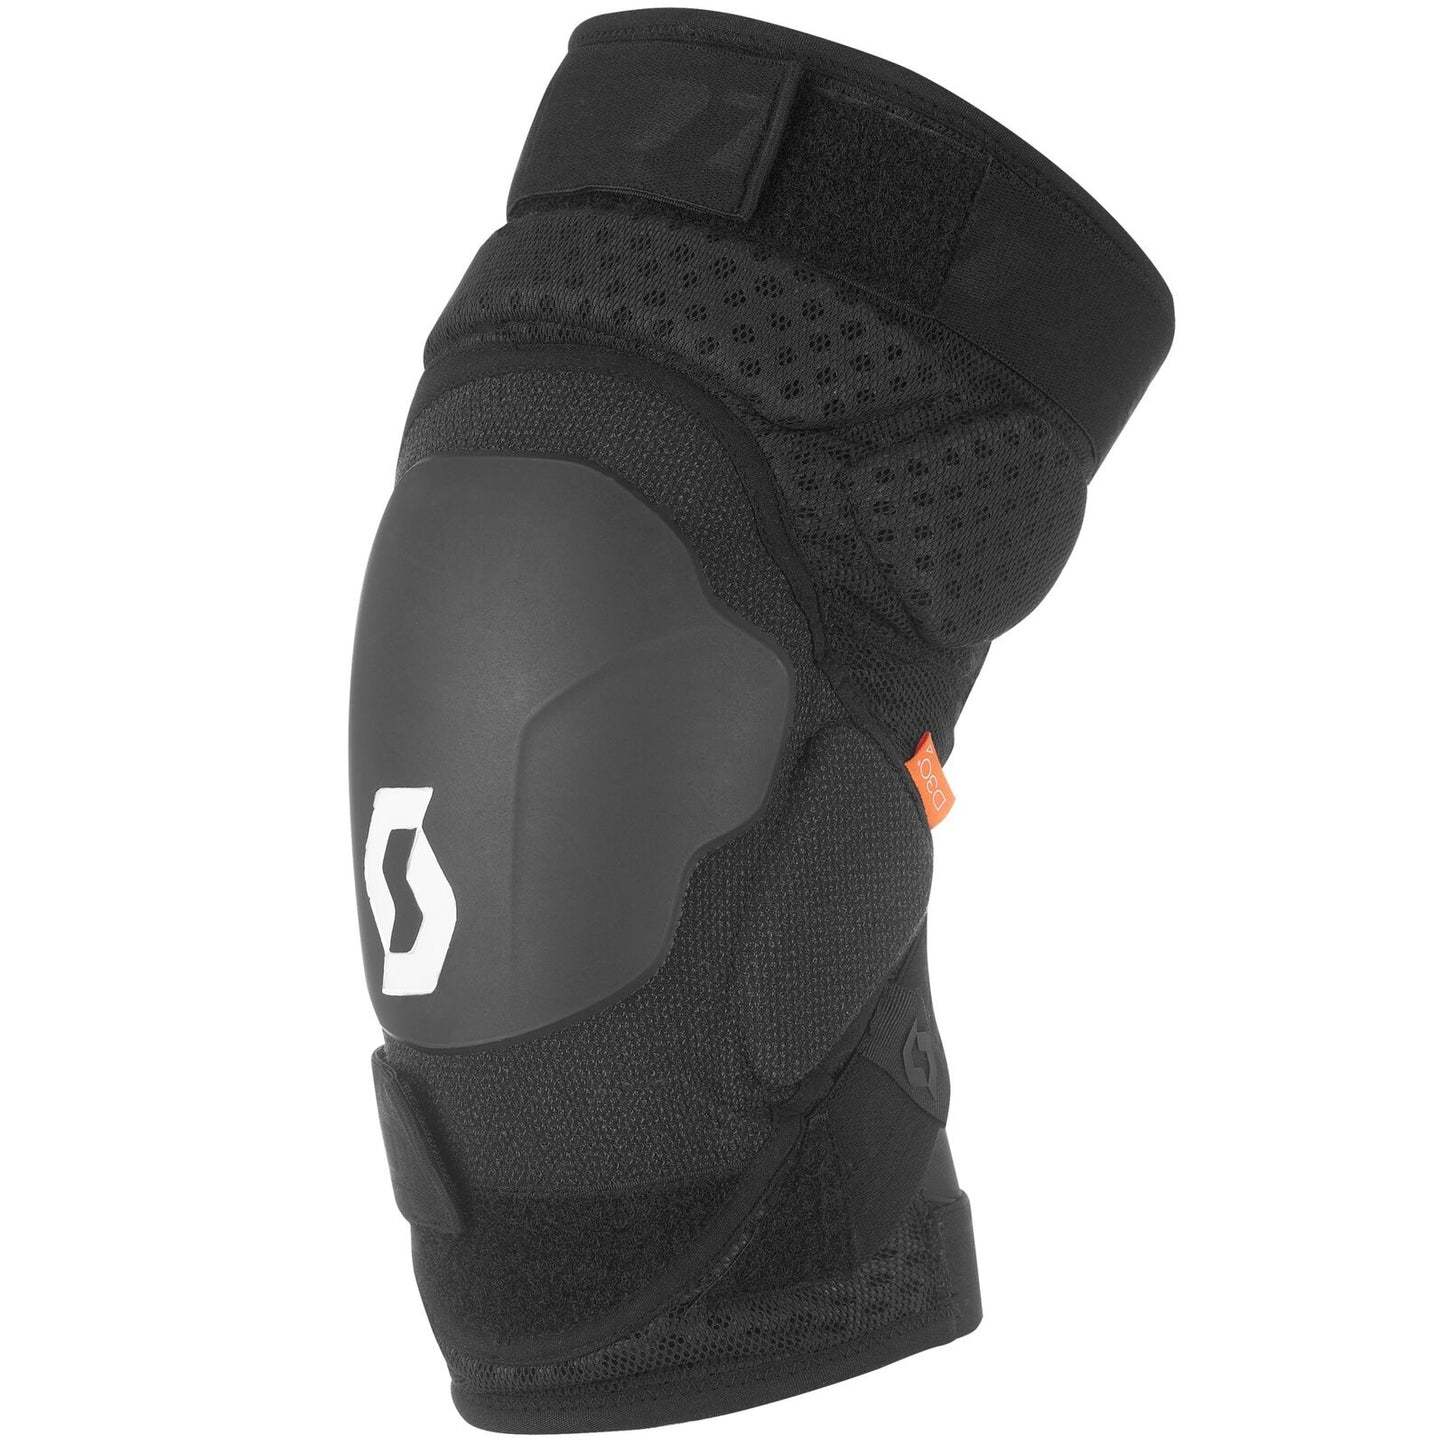 Scott Knee Guards Grenade Evo Hybrid knee pads